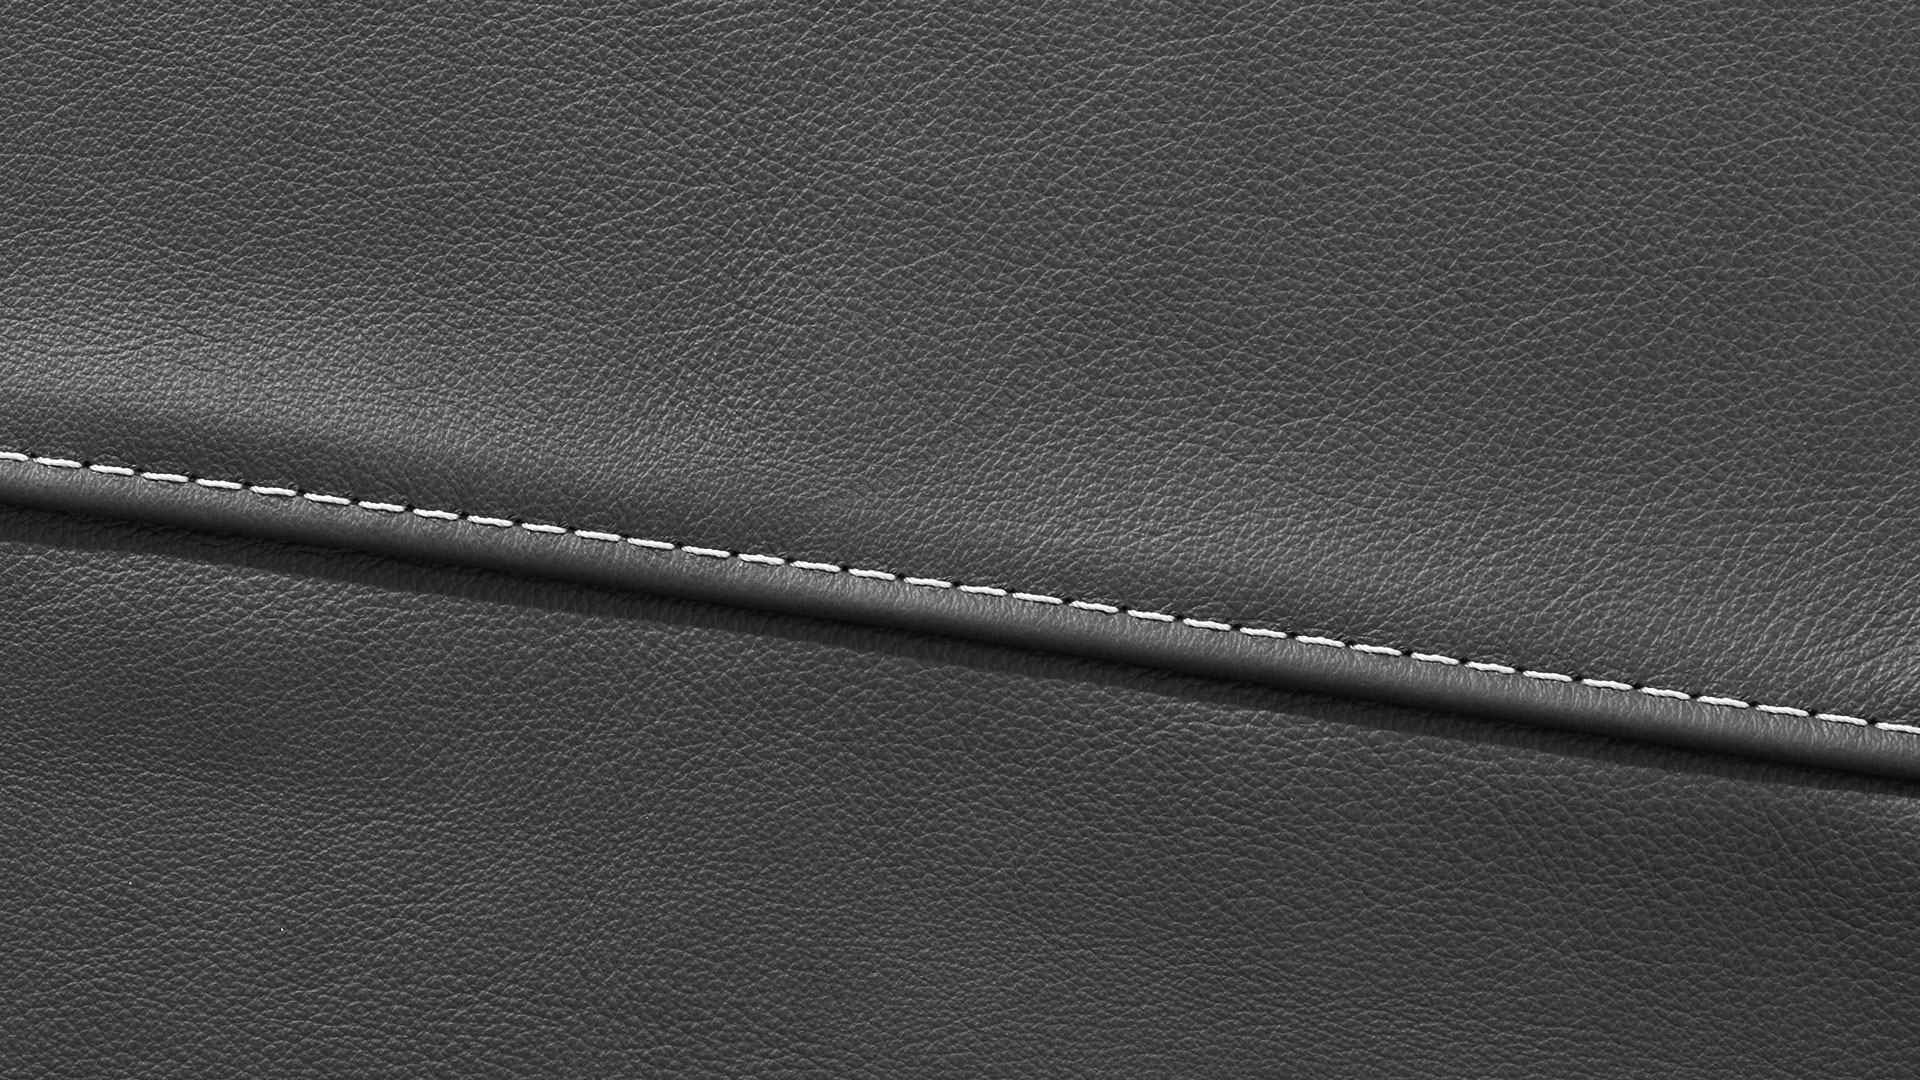 Black leather pattern with seam stitching on Craiyon